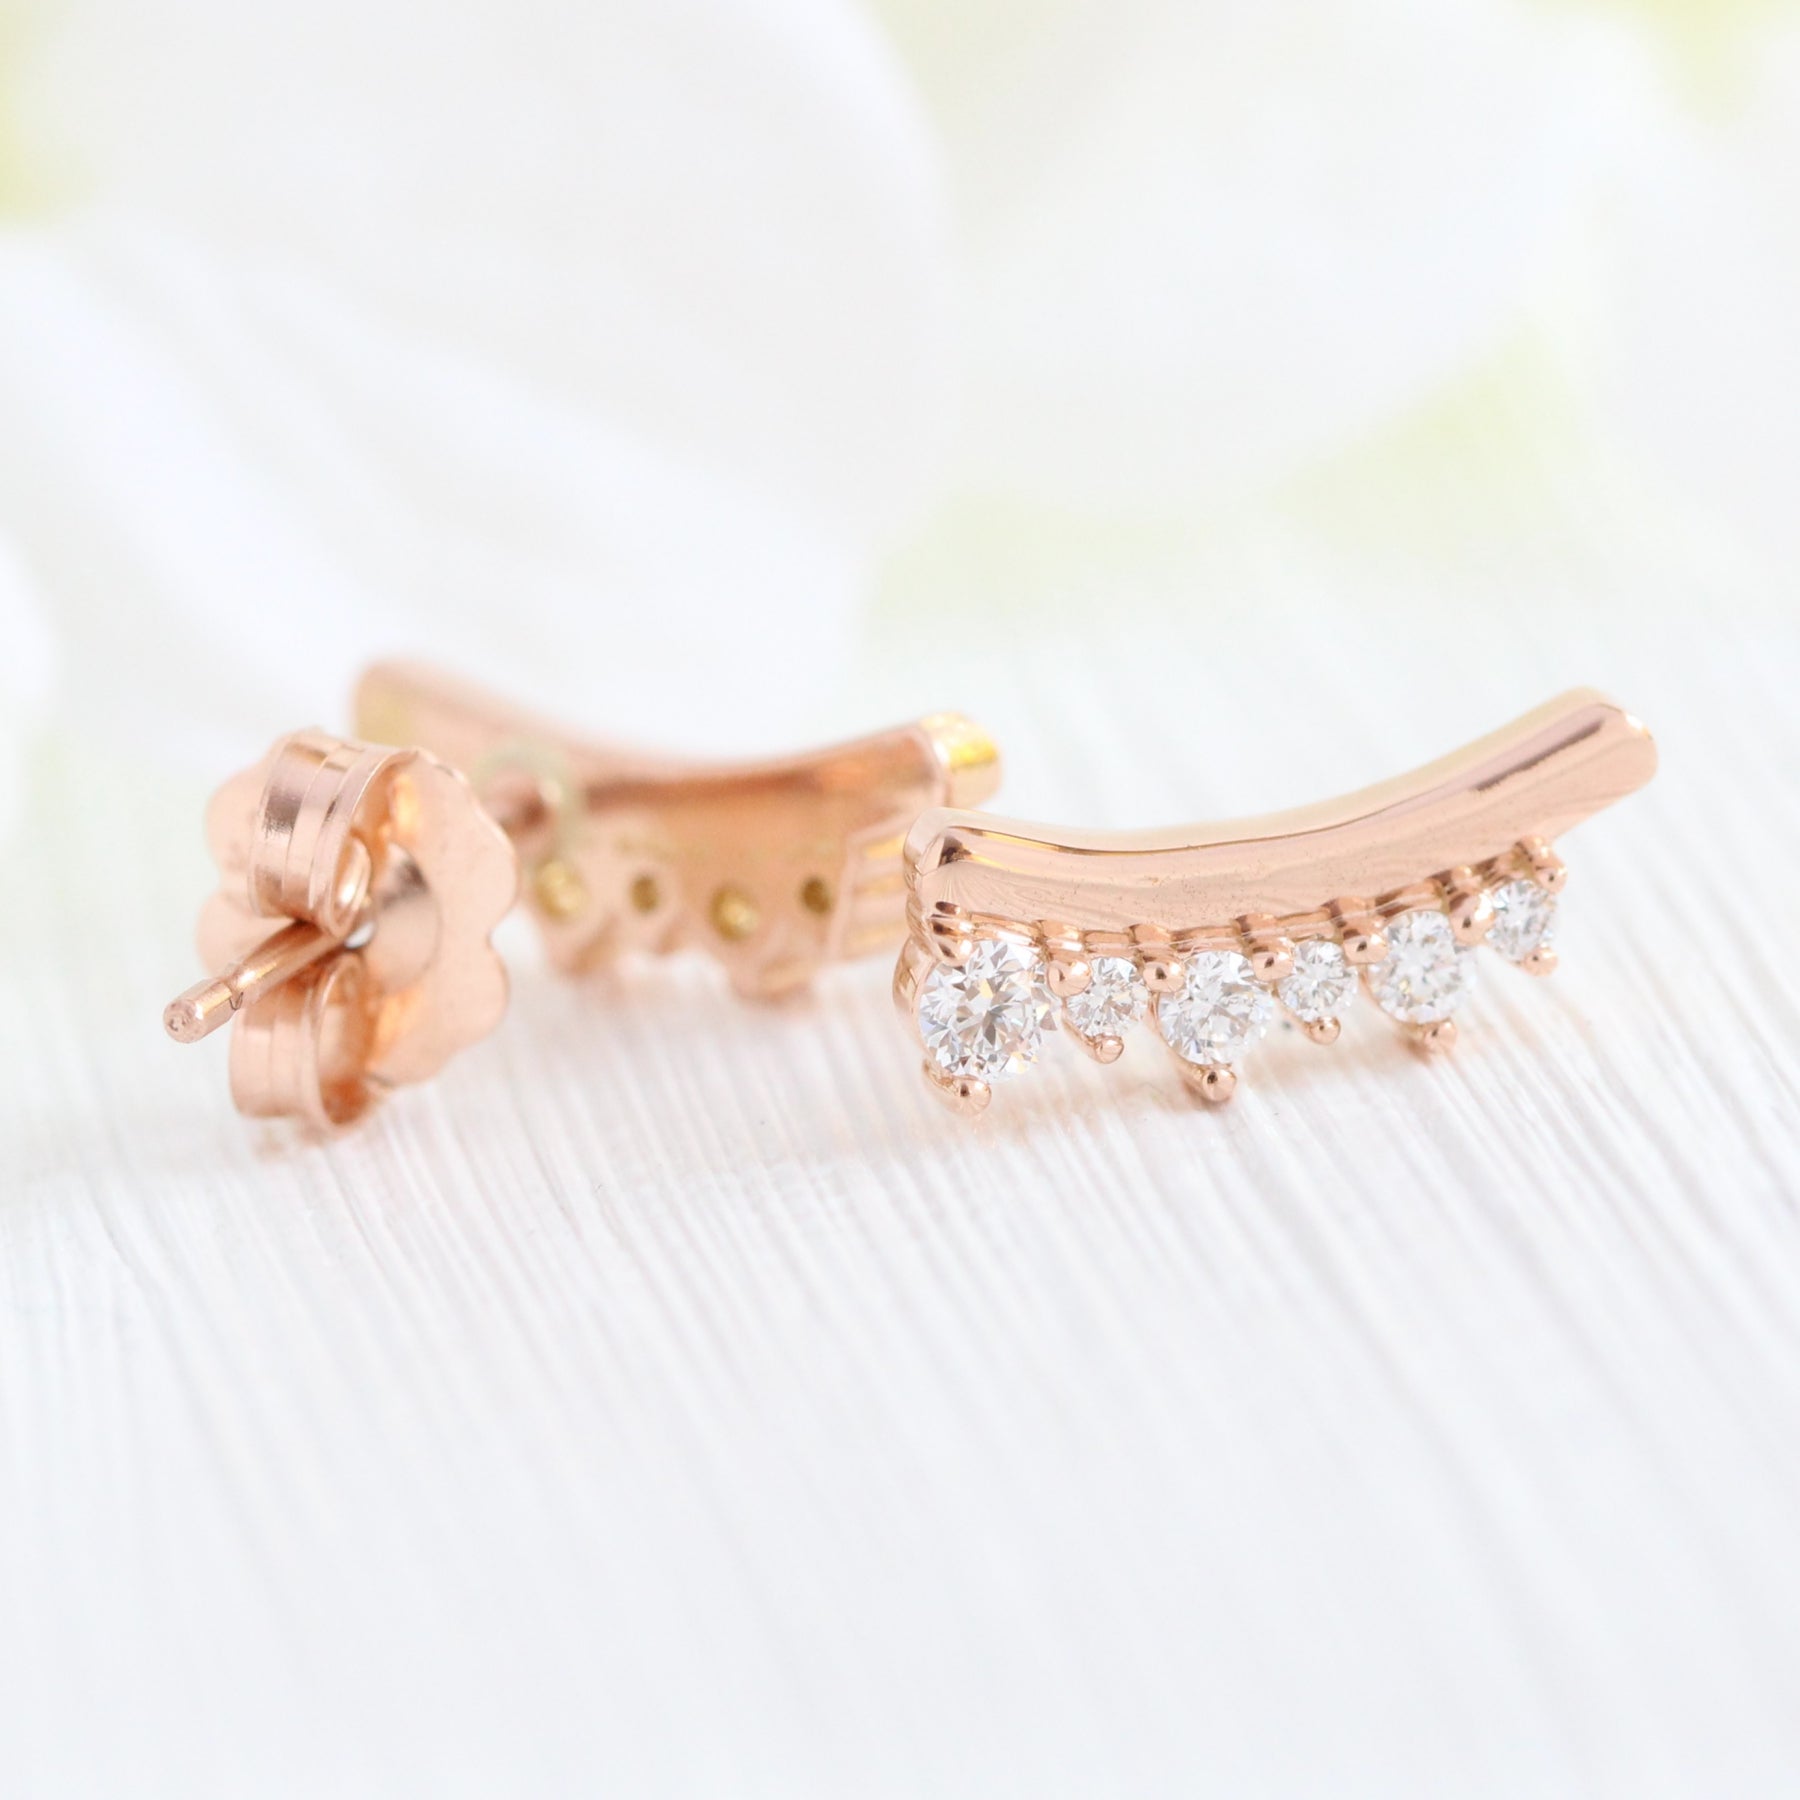 Curved Crown Diamond Earrings in 14k Gold Crawler Earrings Studs